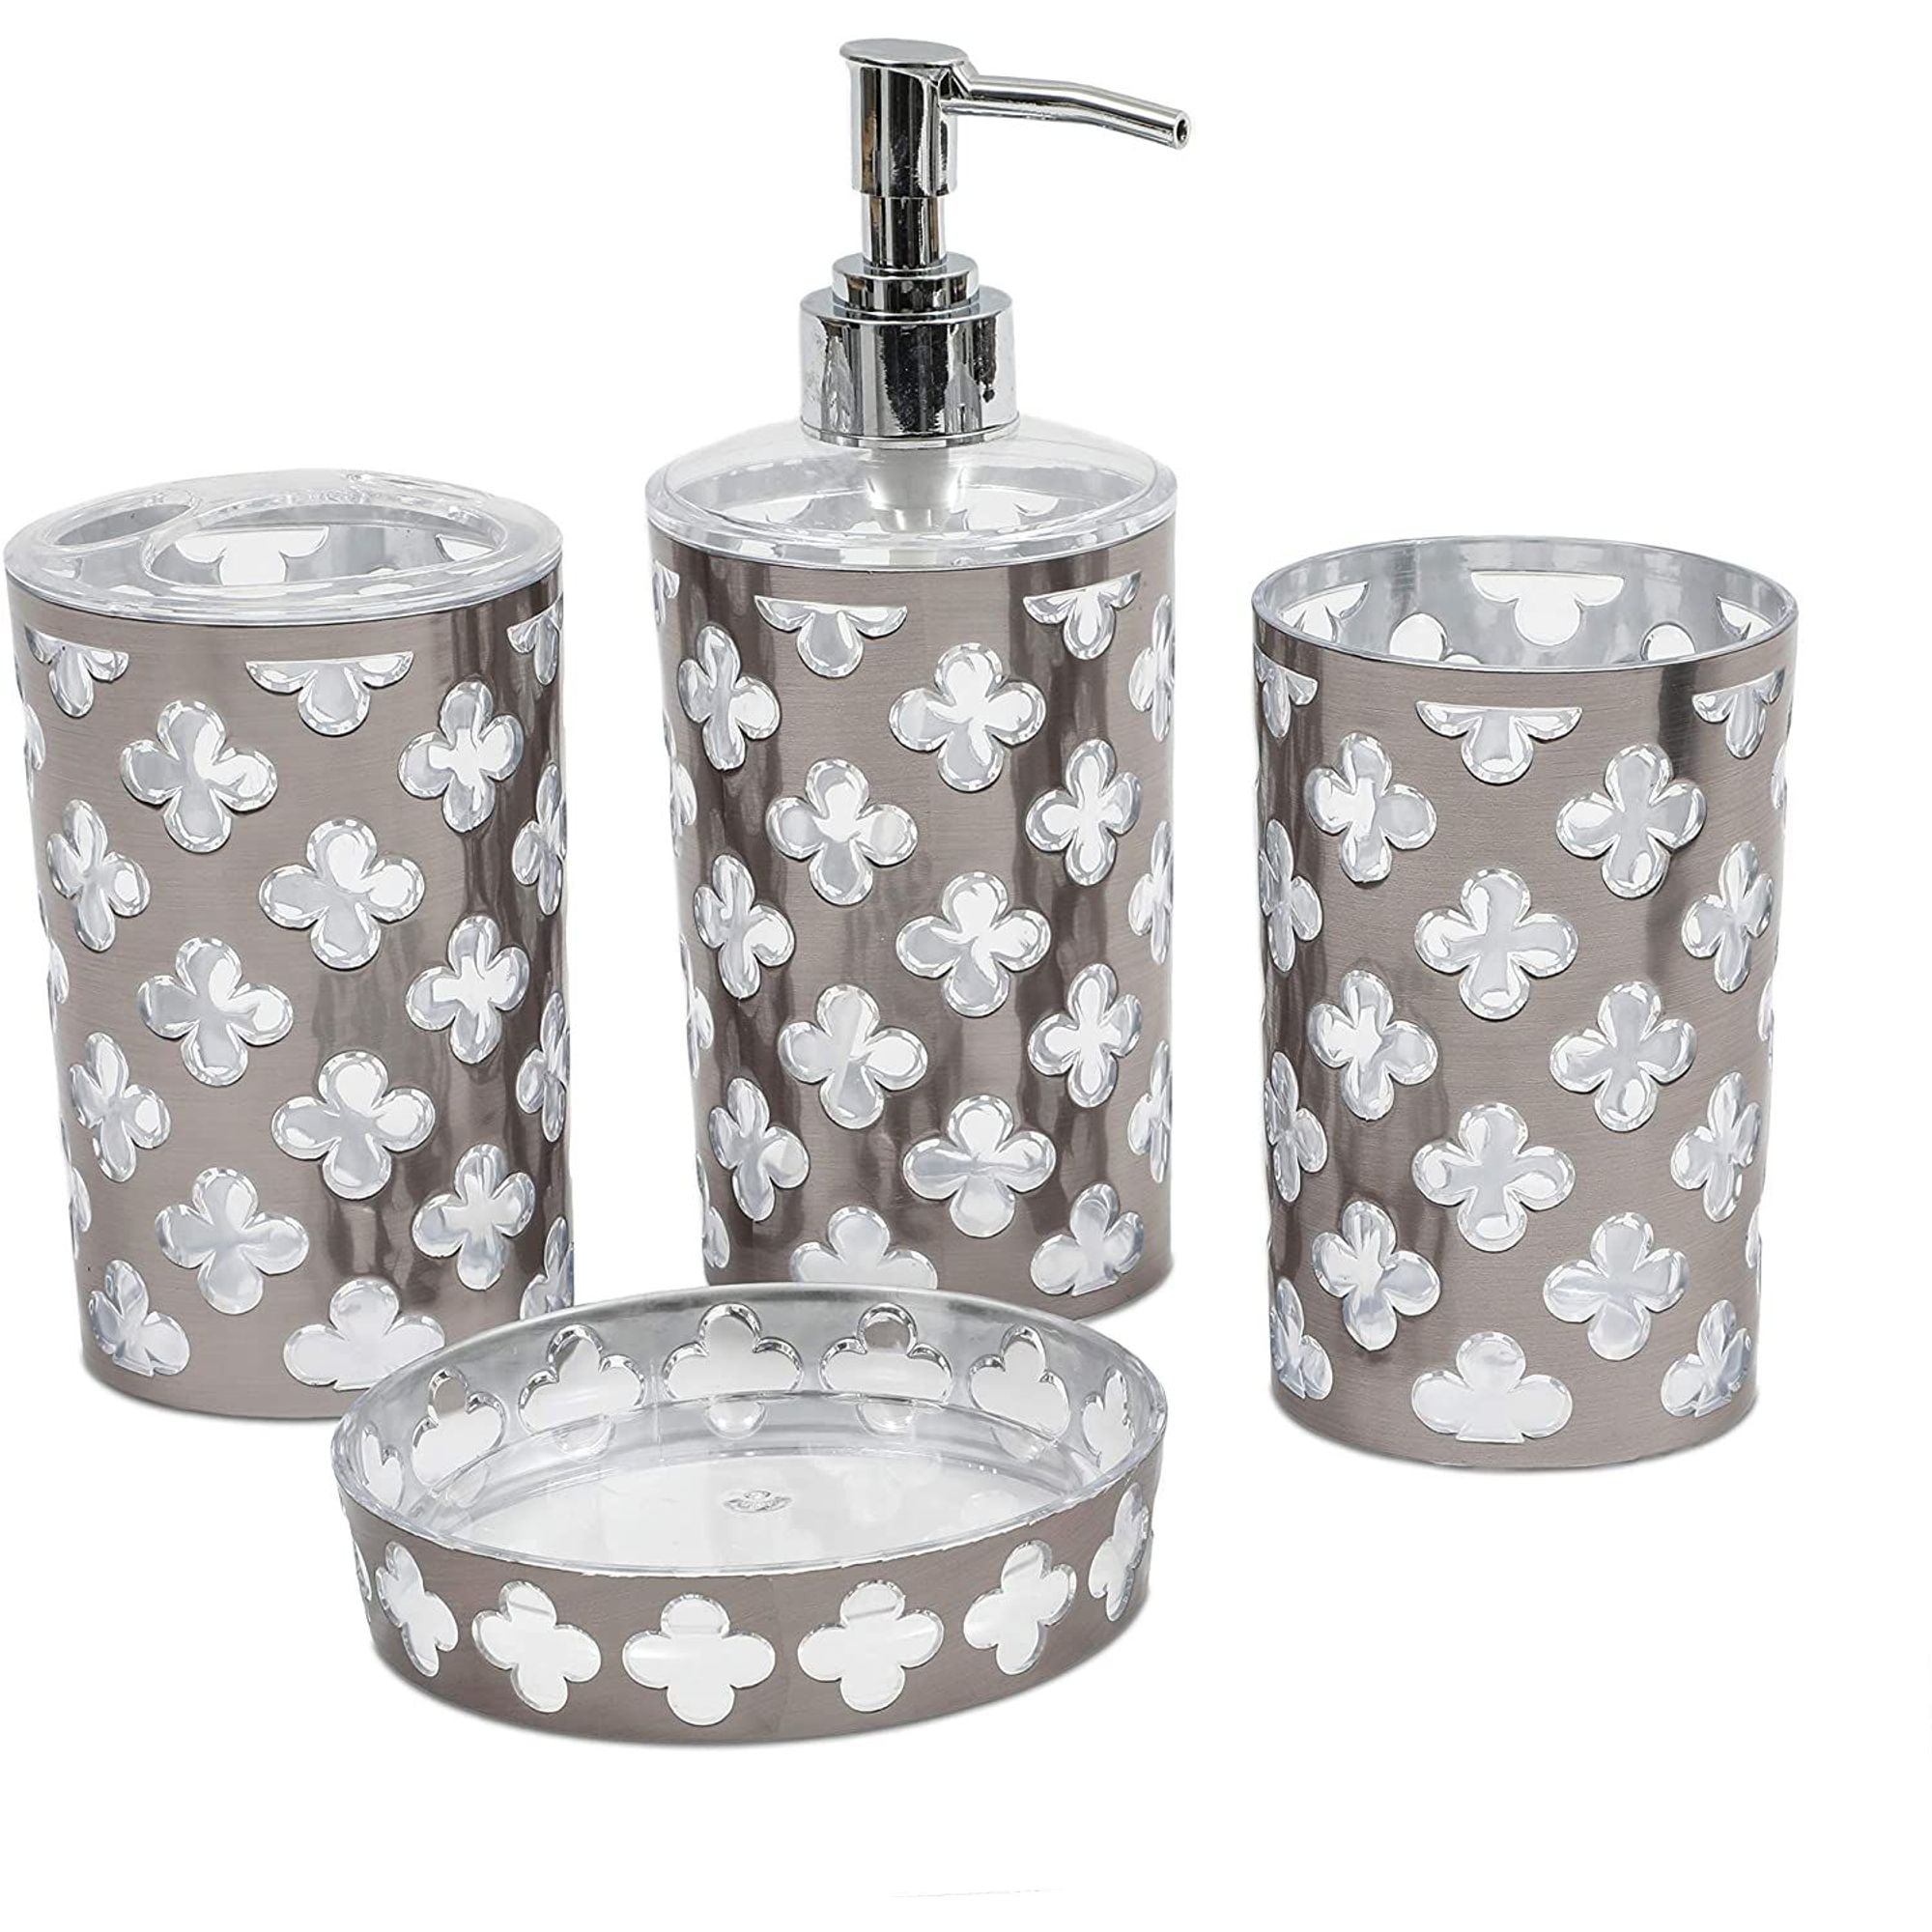 Set of 4 Silver Bathroom Accessories Set - Soap Dispenser, Toothbrush ...